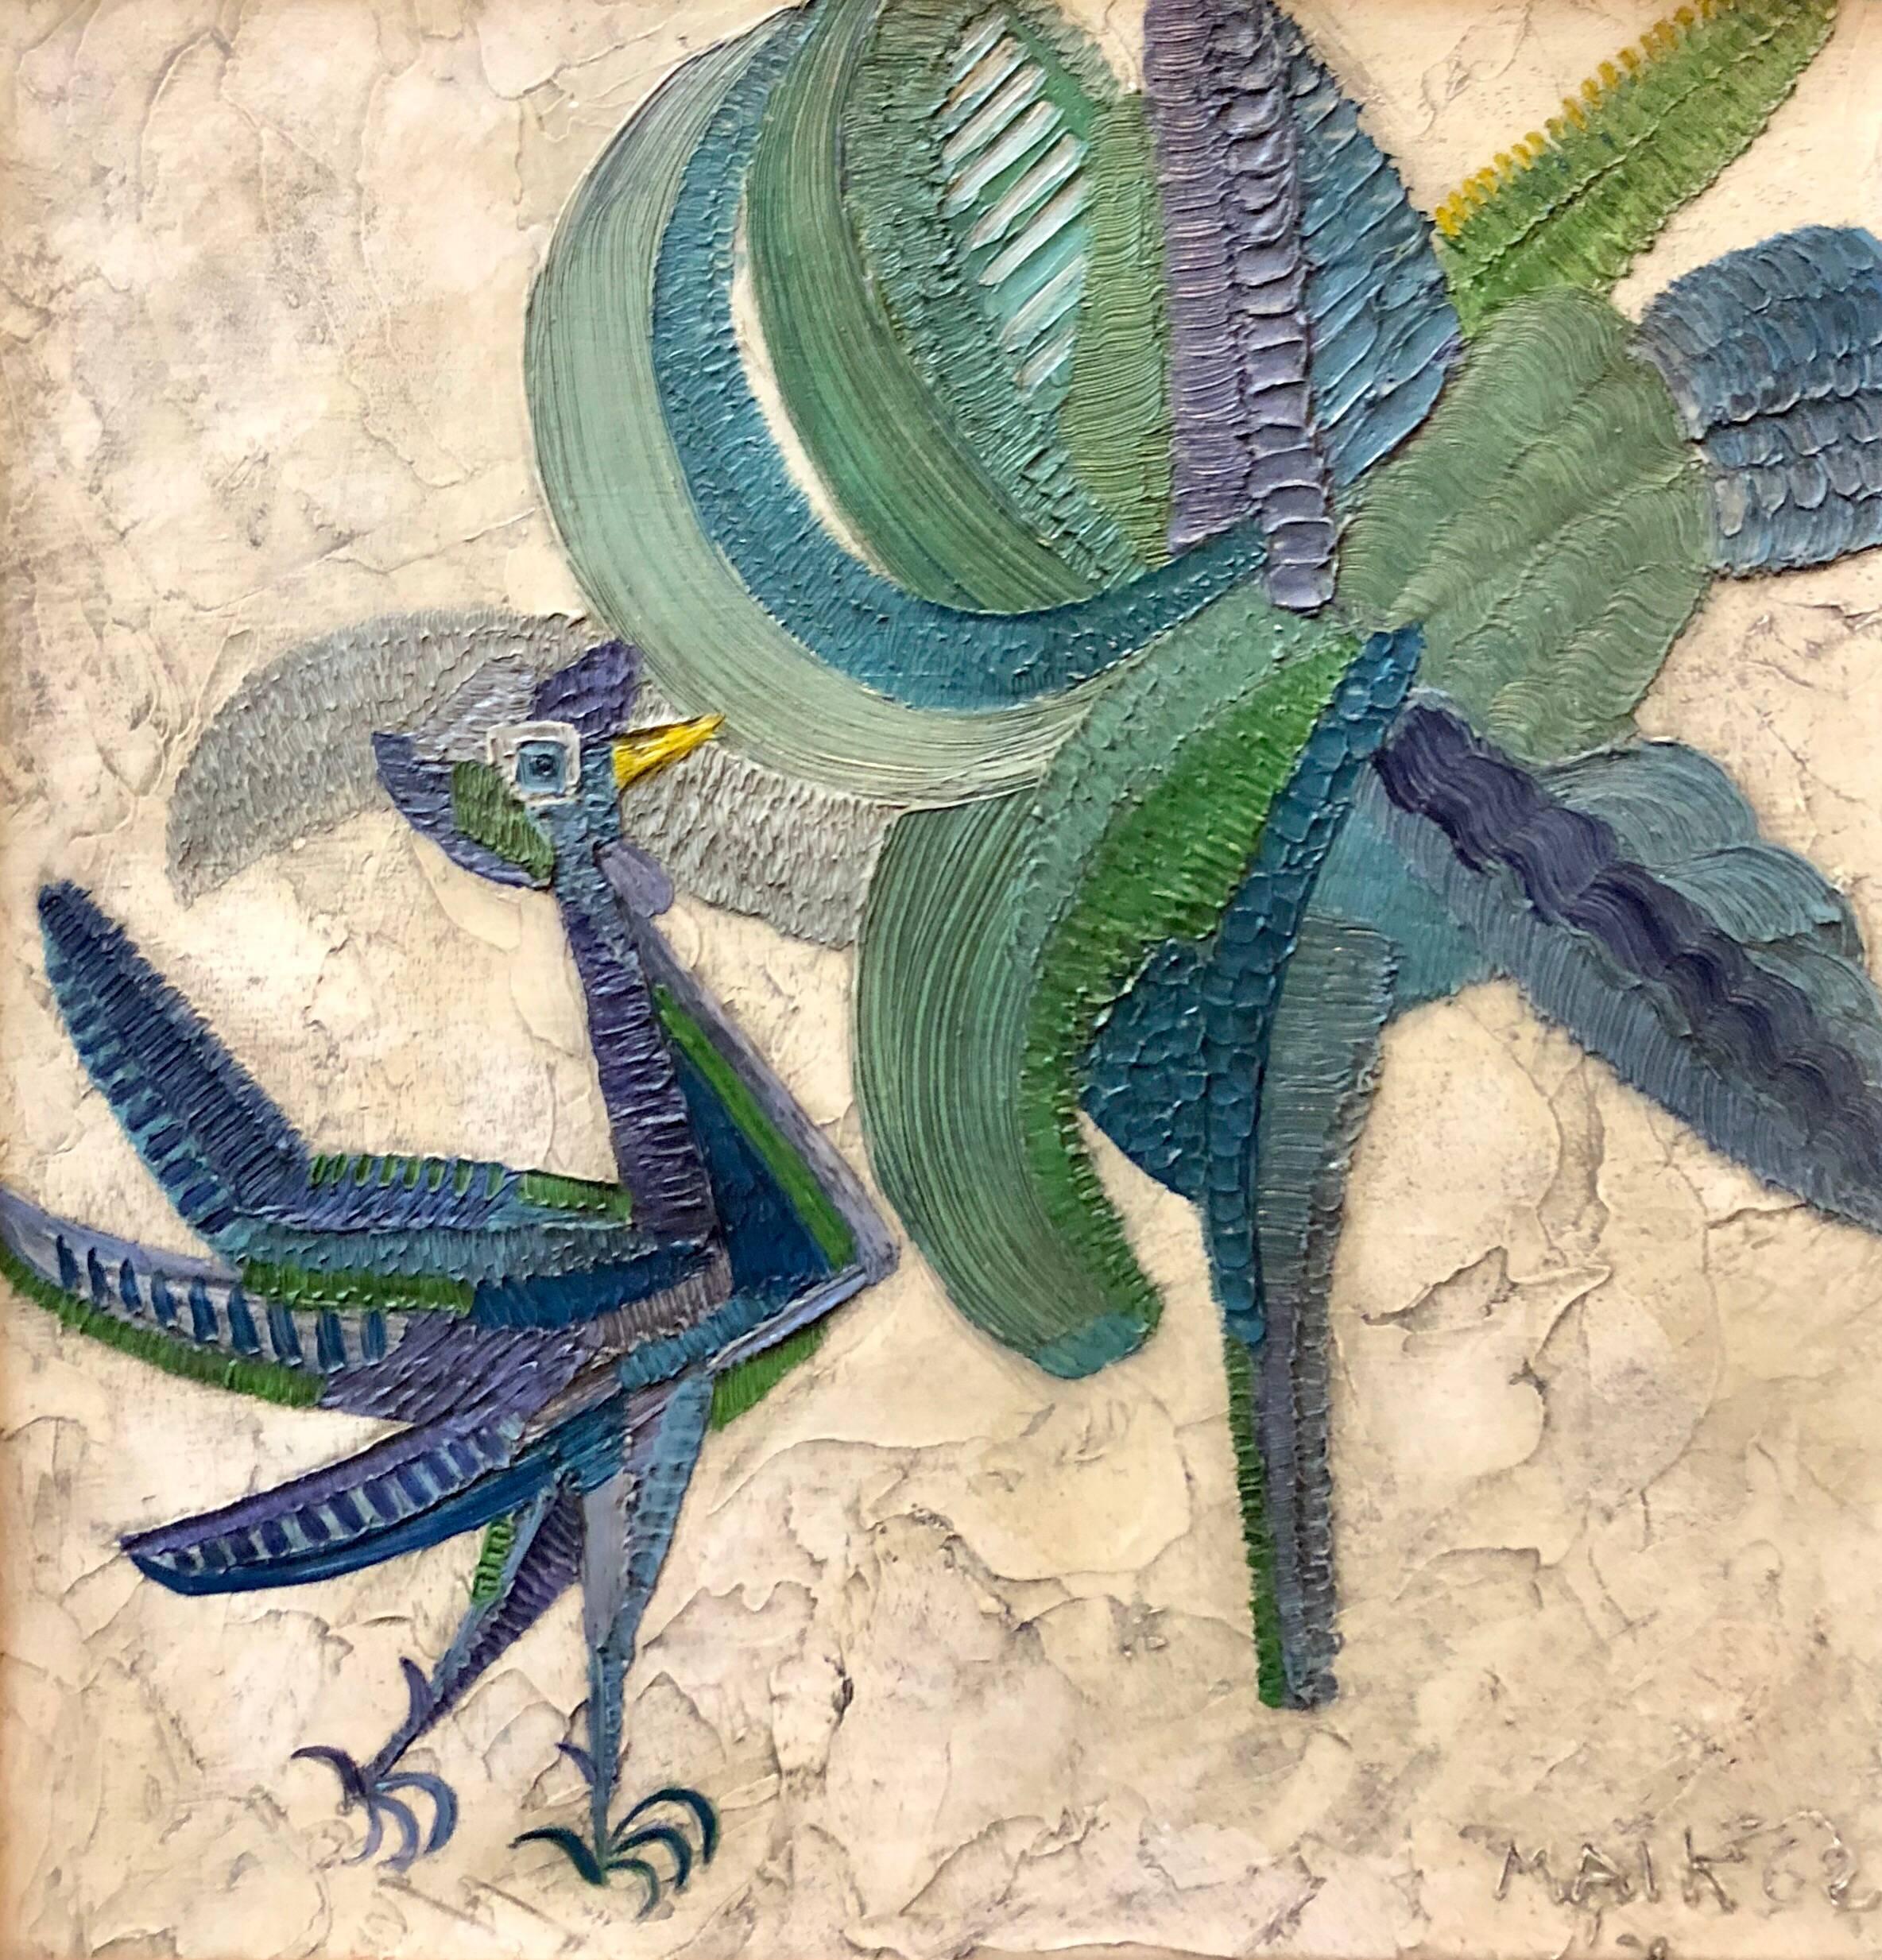 Henri Maik Animal Painting - Naive Oil Painting Primitive Folk Art Jungle Scene with Bird and Flower